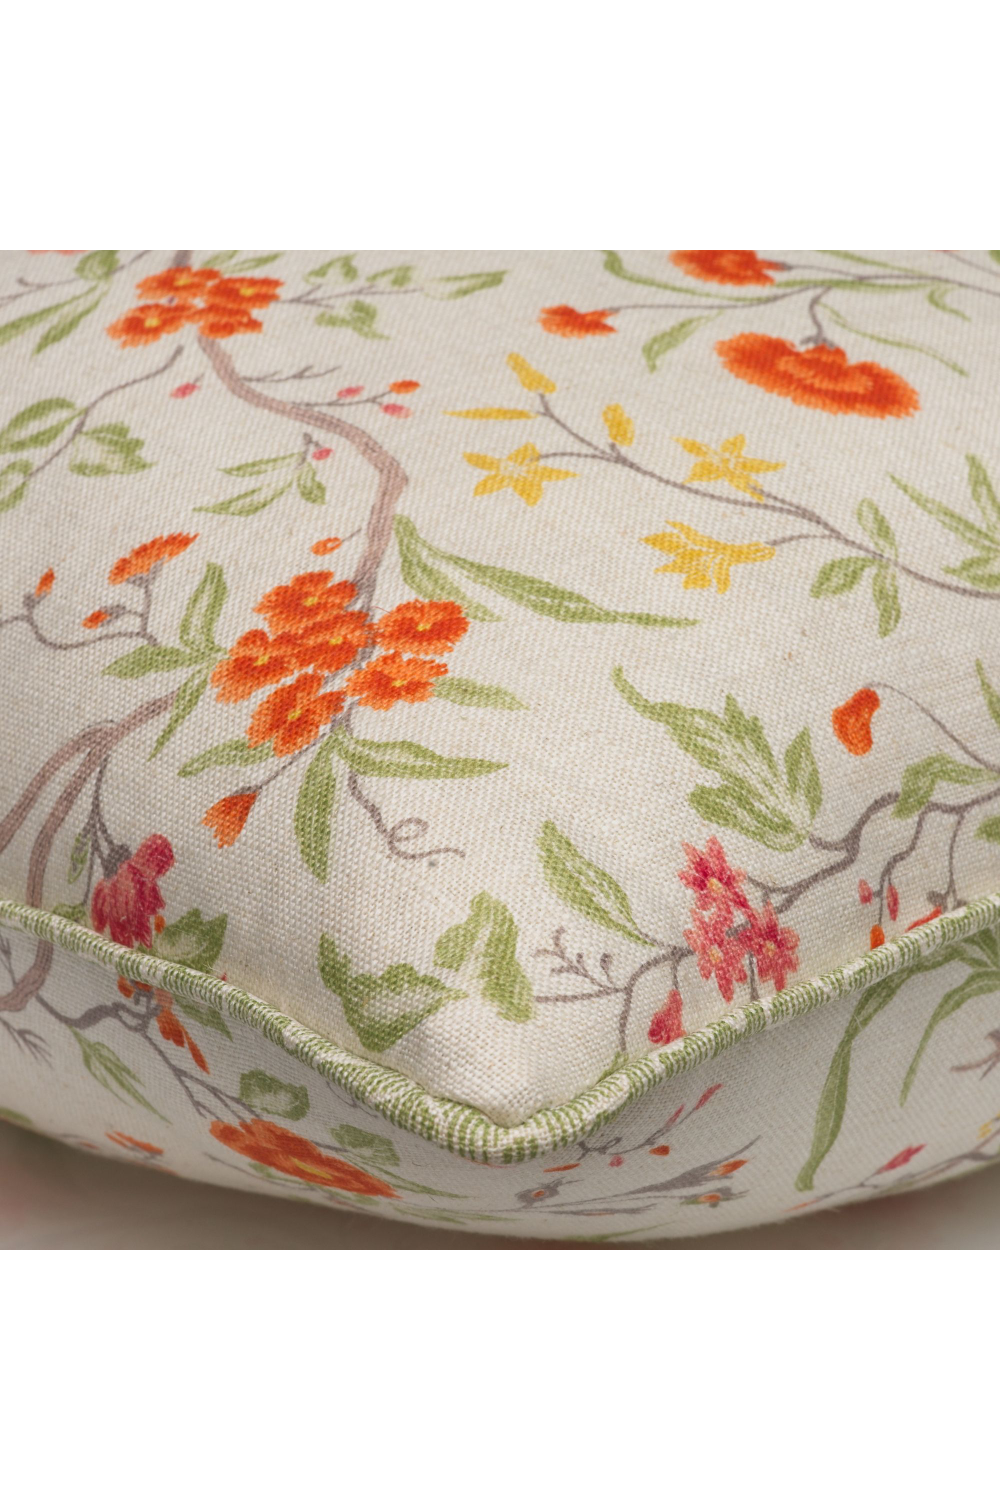 Floral Linen Cushion | Andrew Martin Ramble | Oroa.com